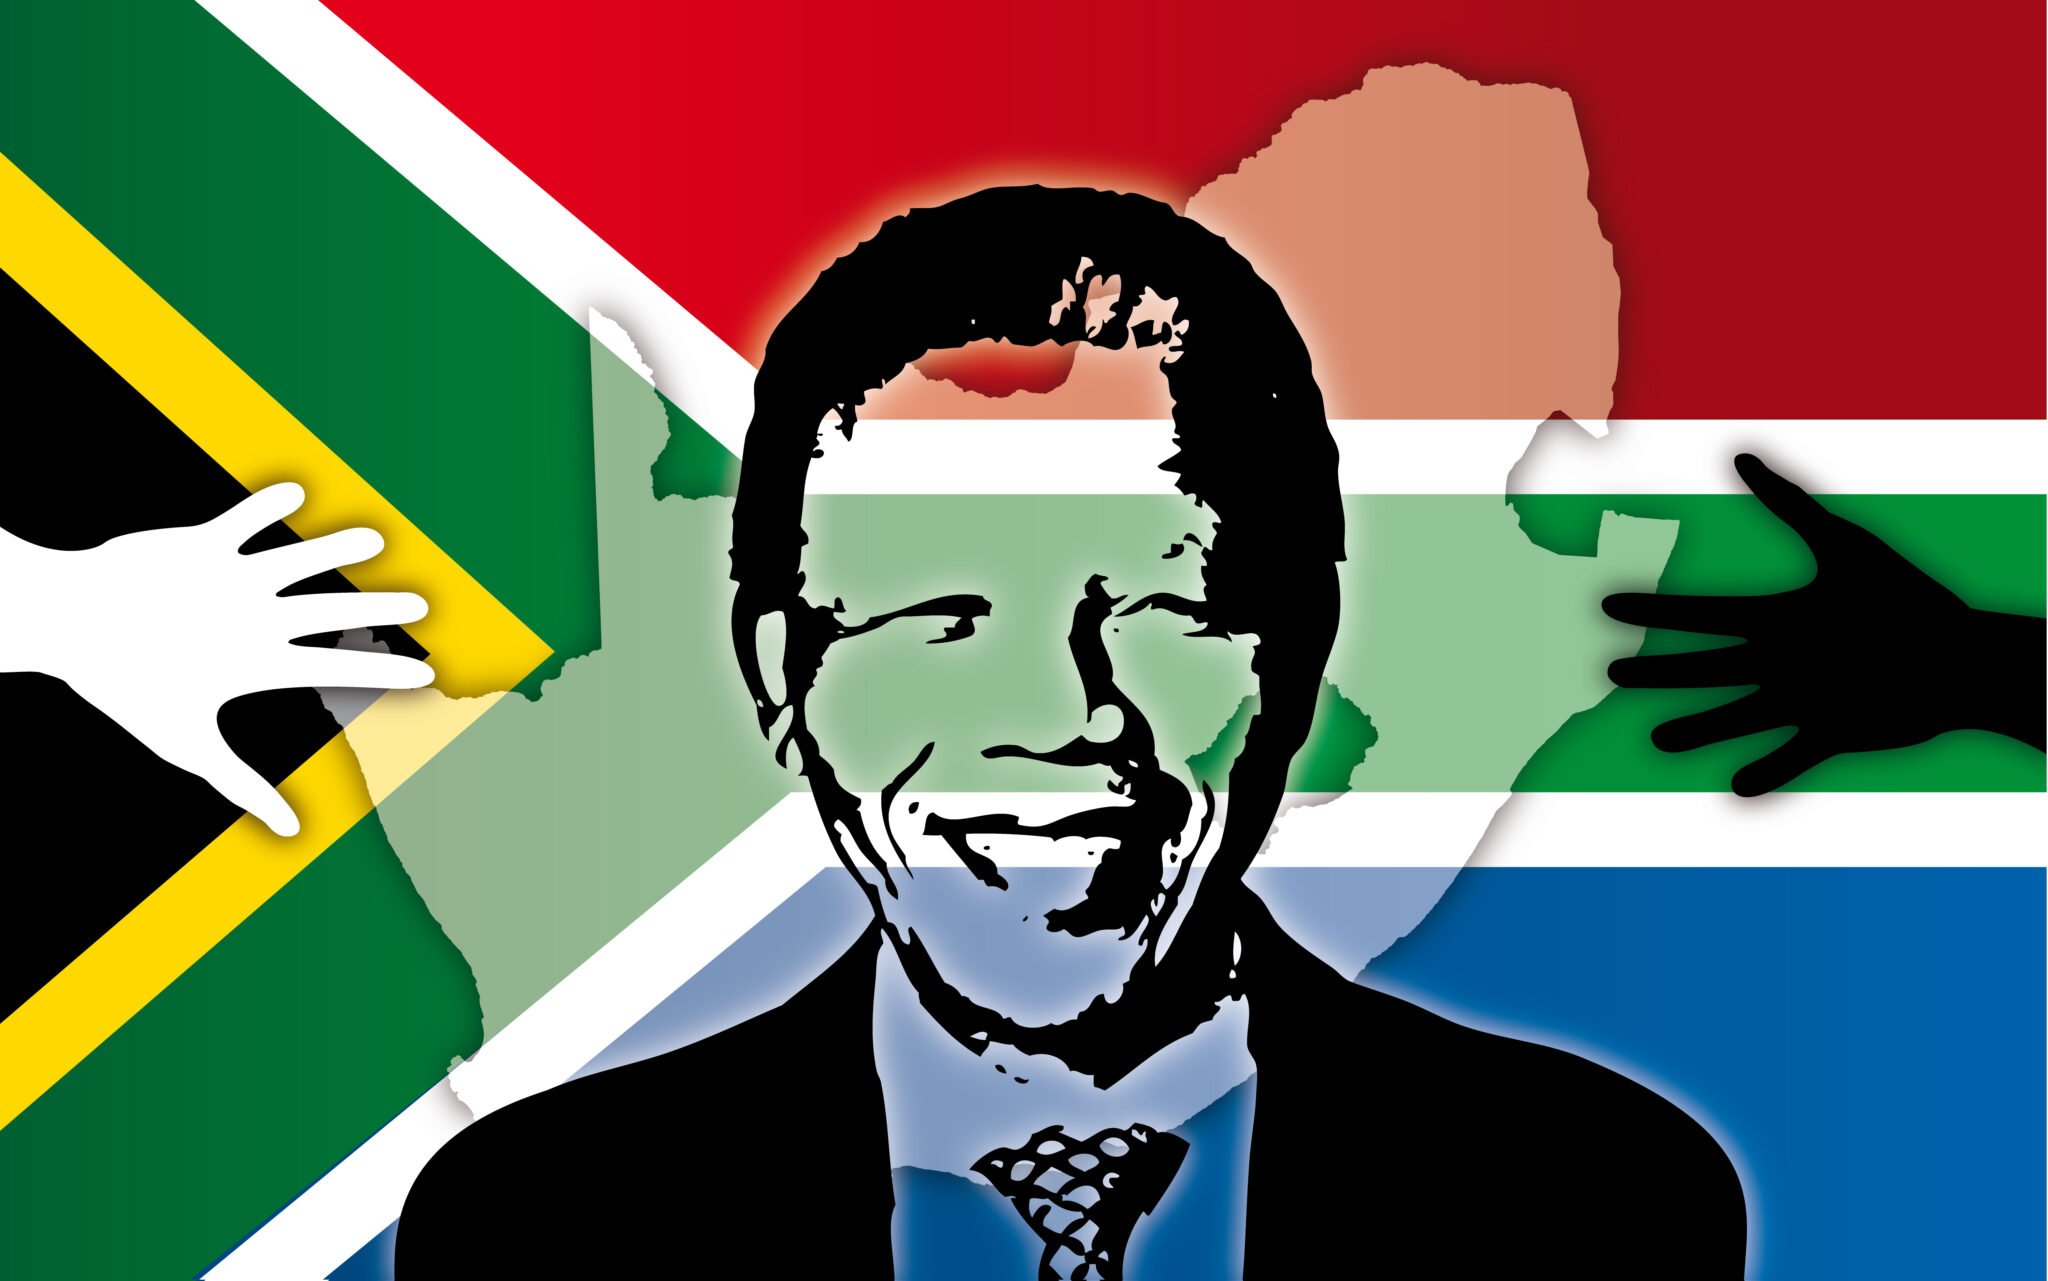 Mandela south africa symbol and flag